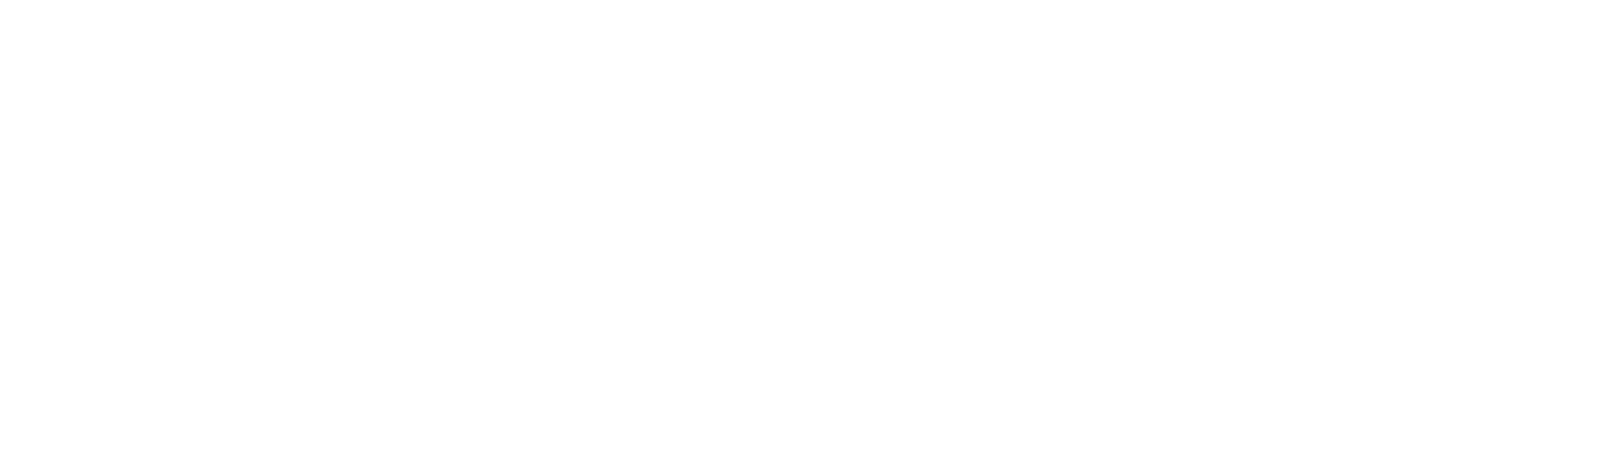 Bank of China logo large for dark backgrounds (transparent PNG)